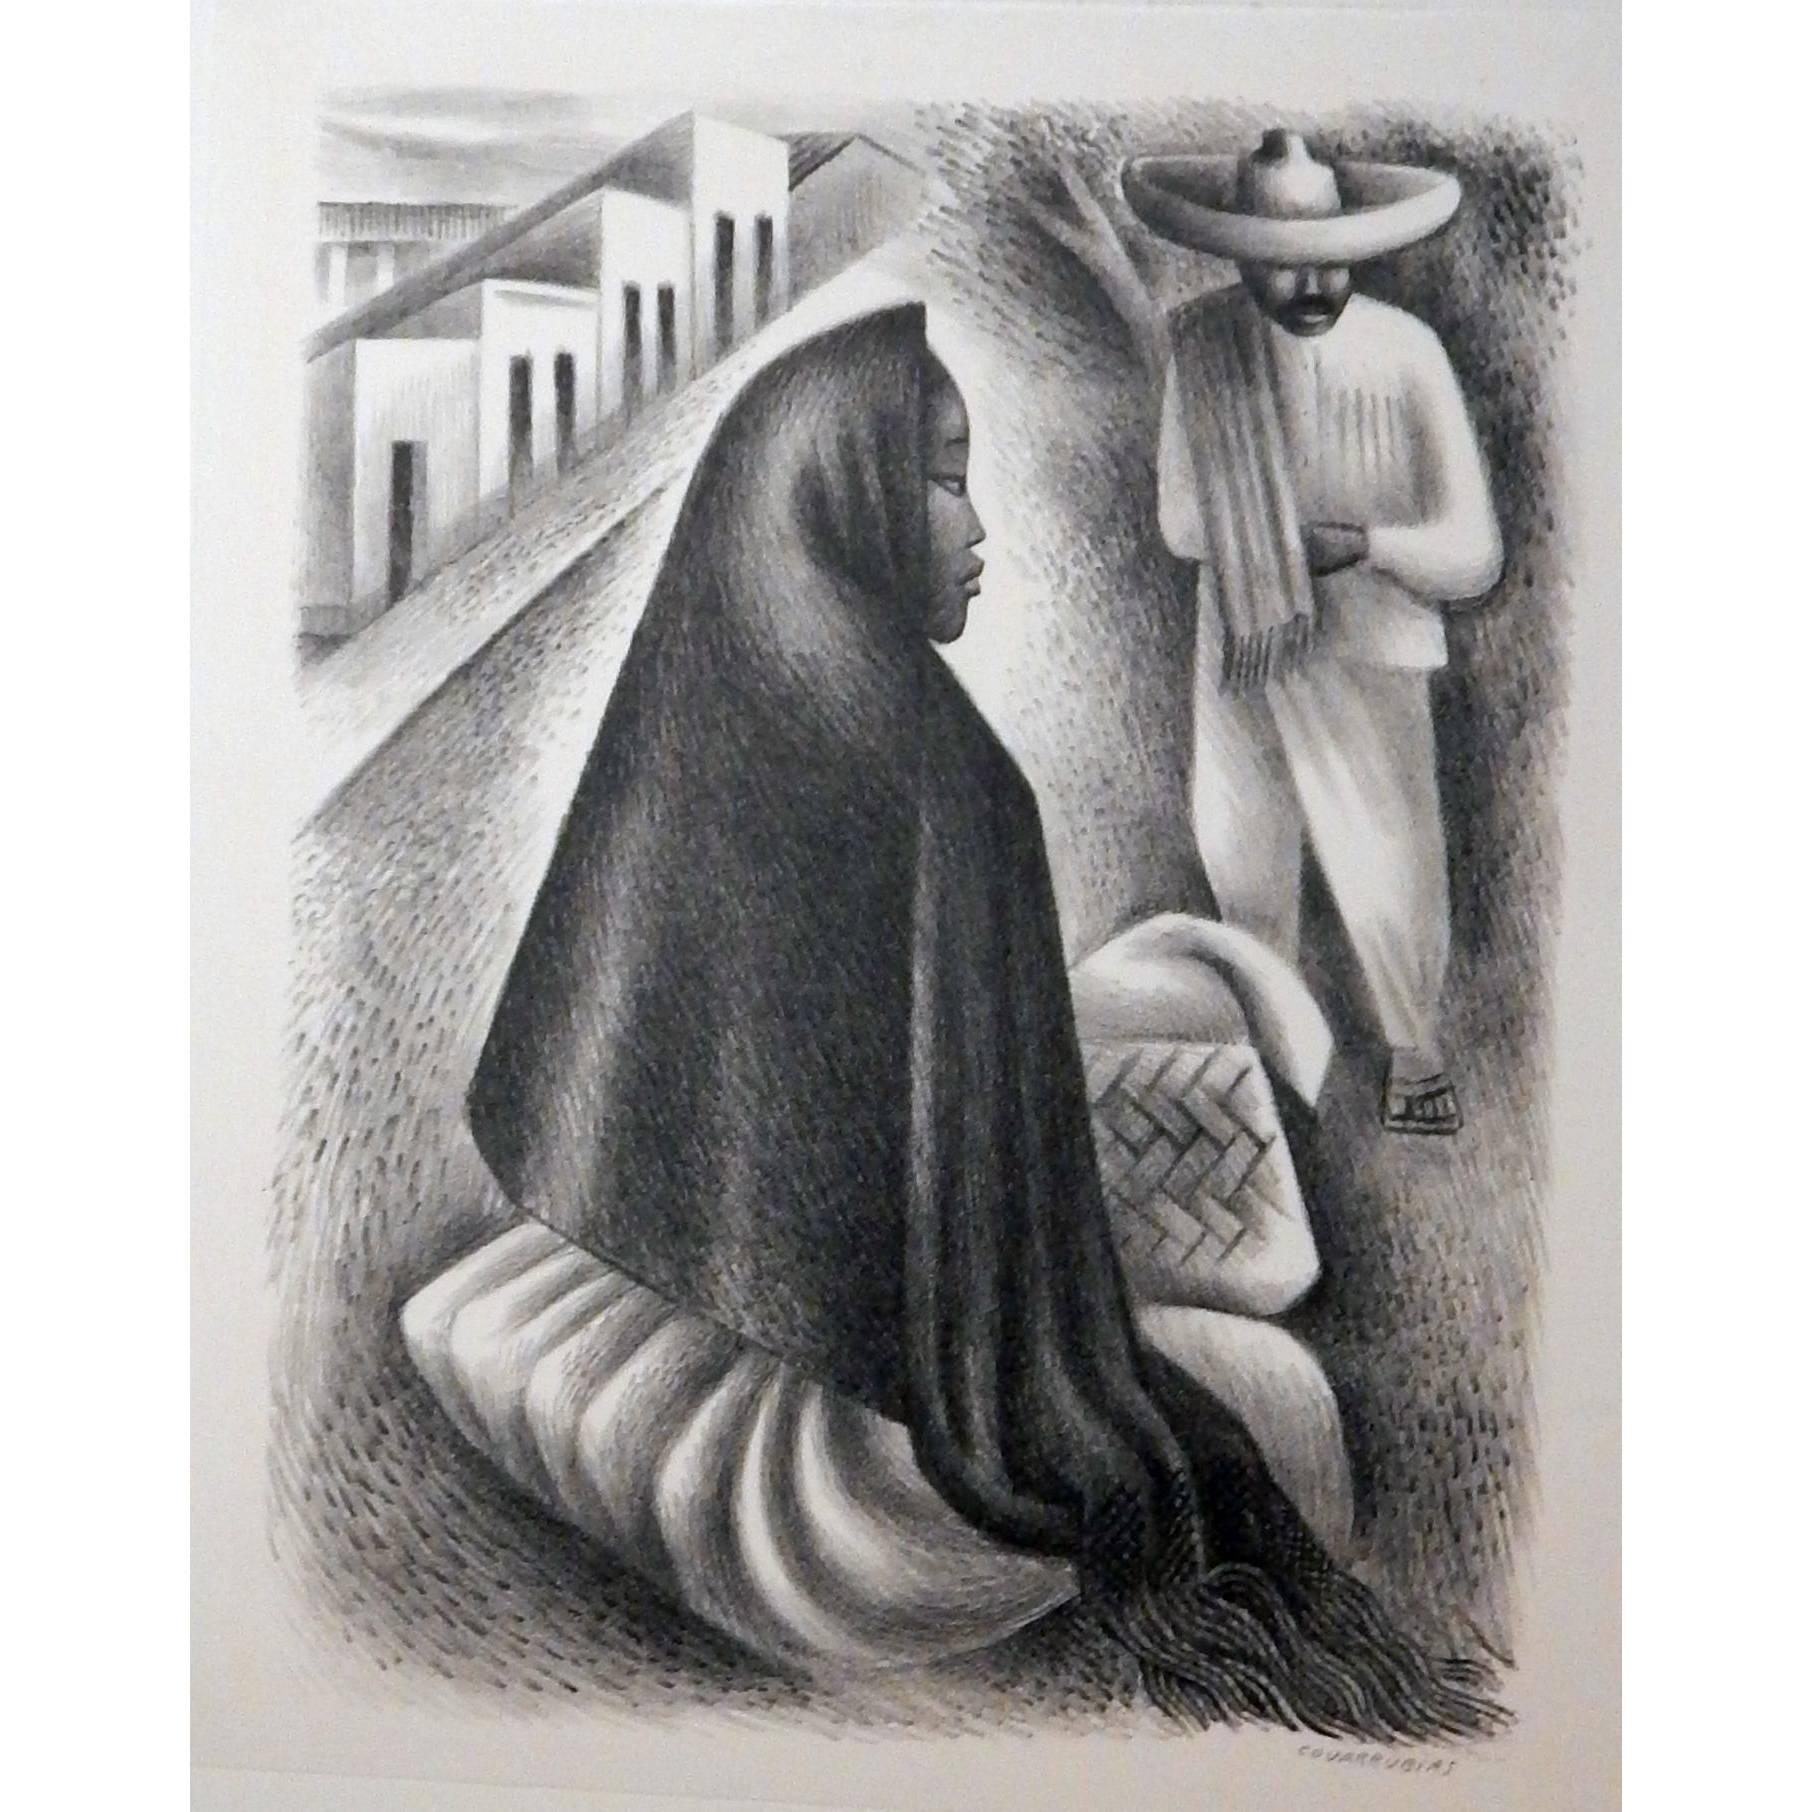 Miguel Covarrubias Original Stone Lithograph, 1940, "Mexican Street Scene"